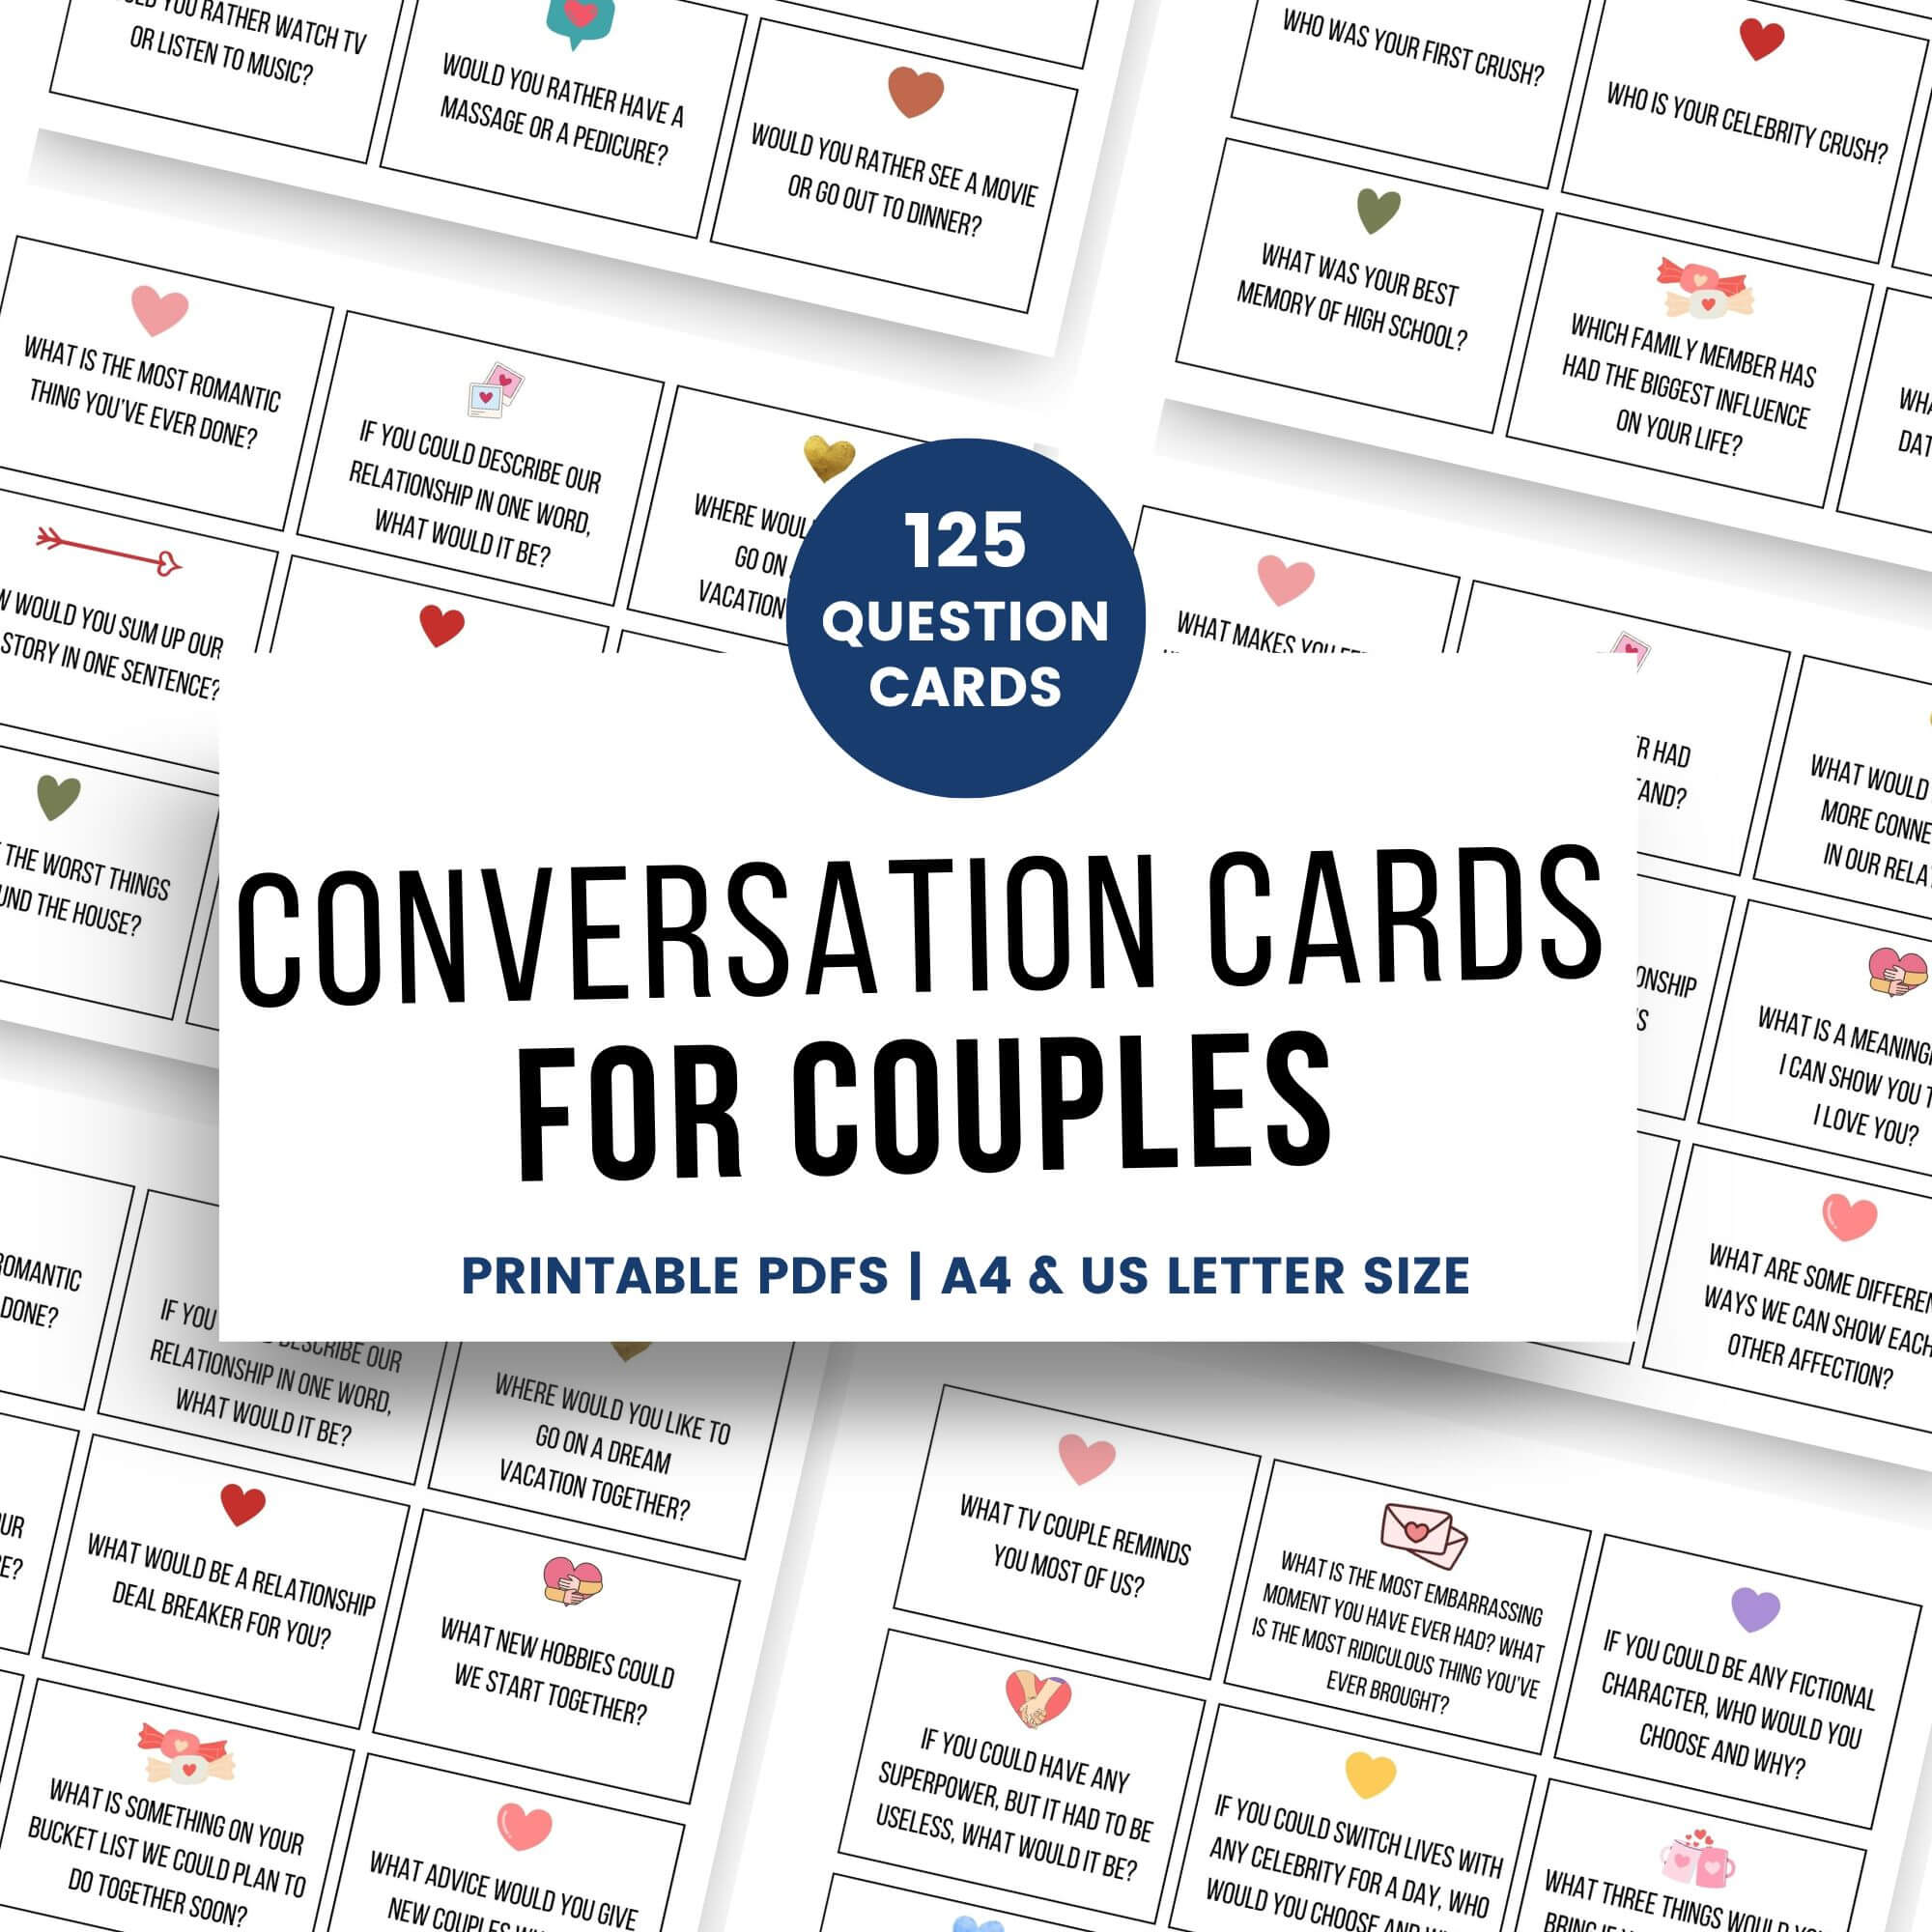 Conversation cards for couples shop banner